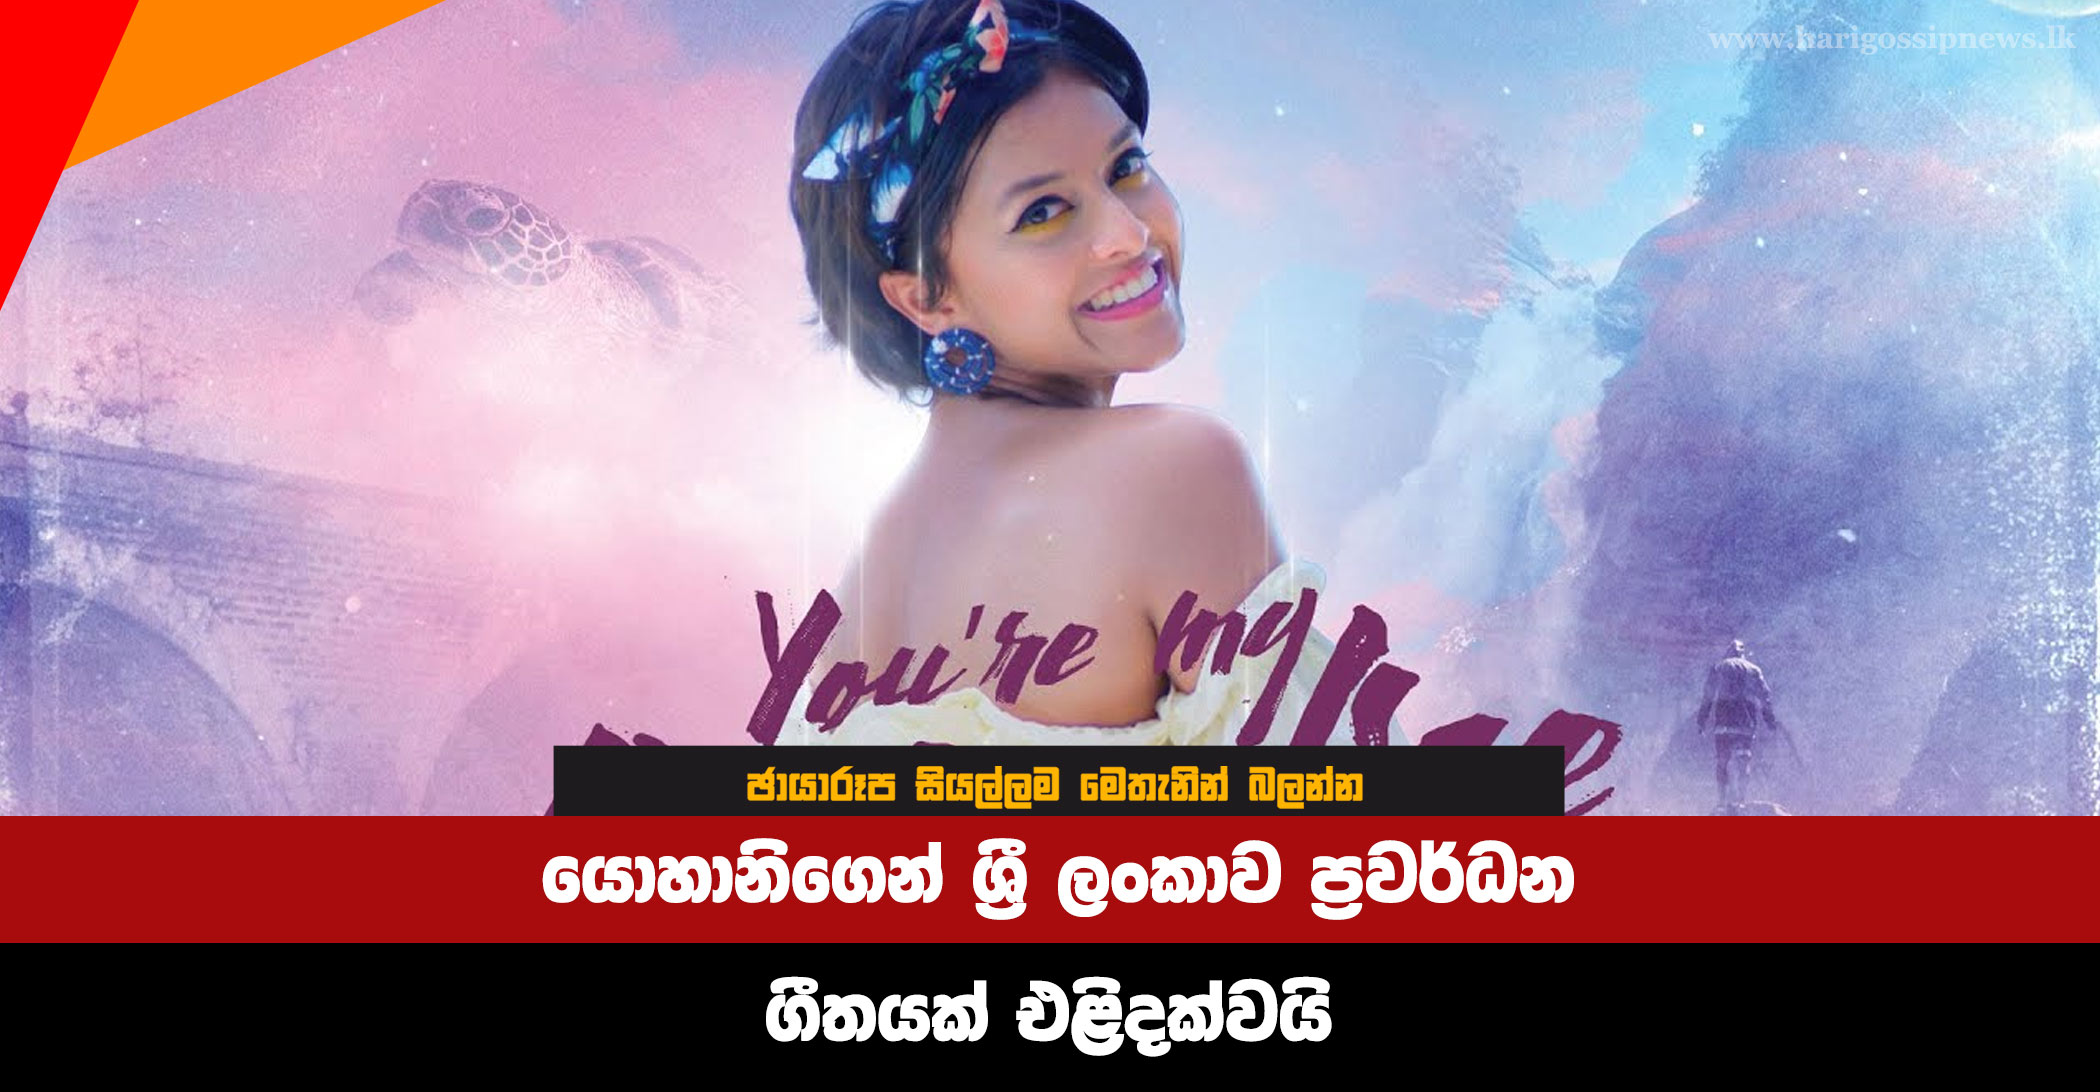 Johanni launches Sri Lanka promotional song